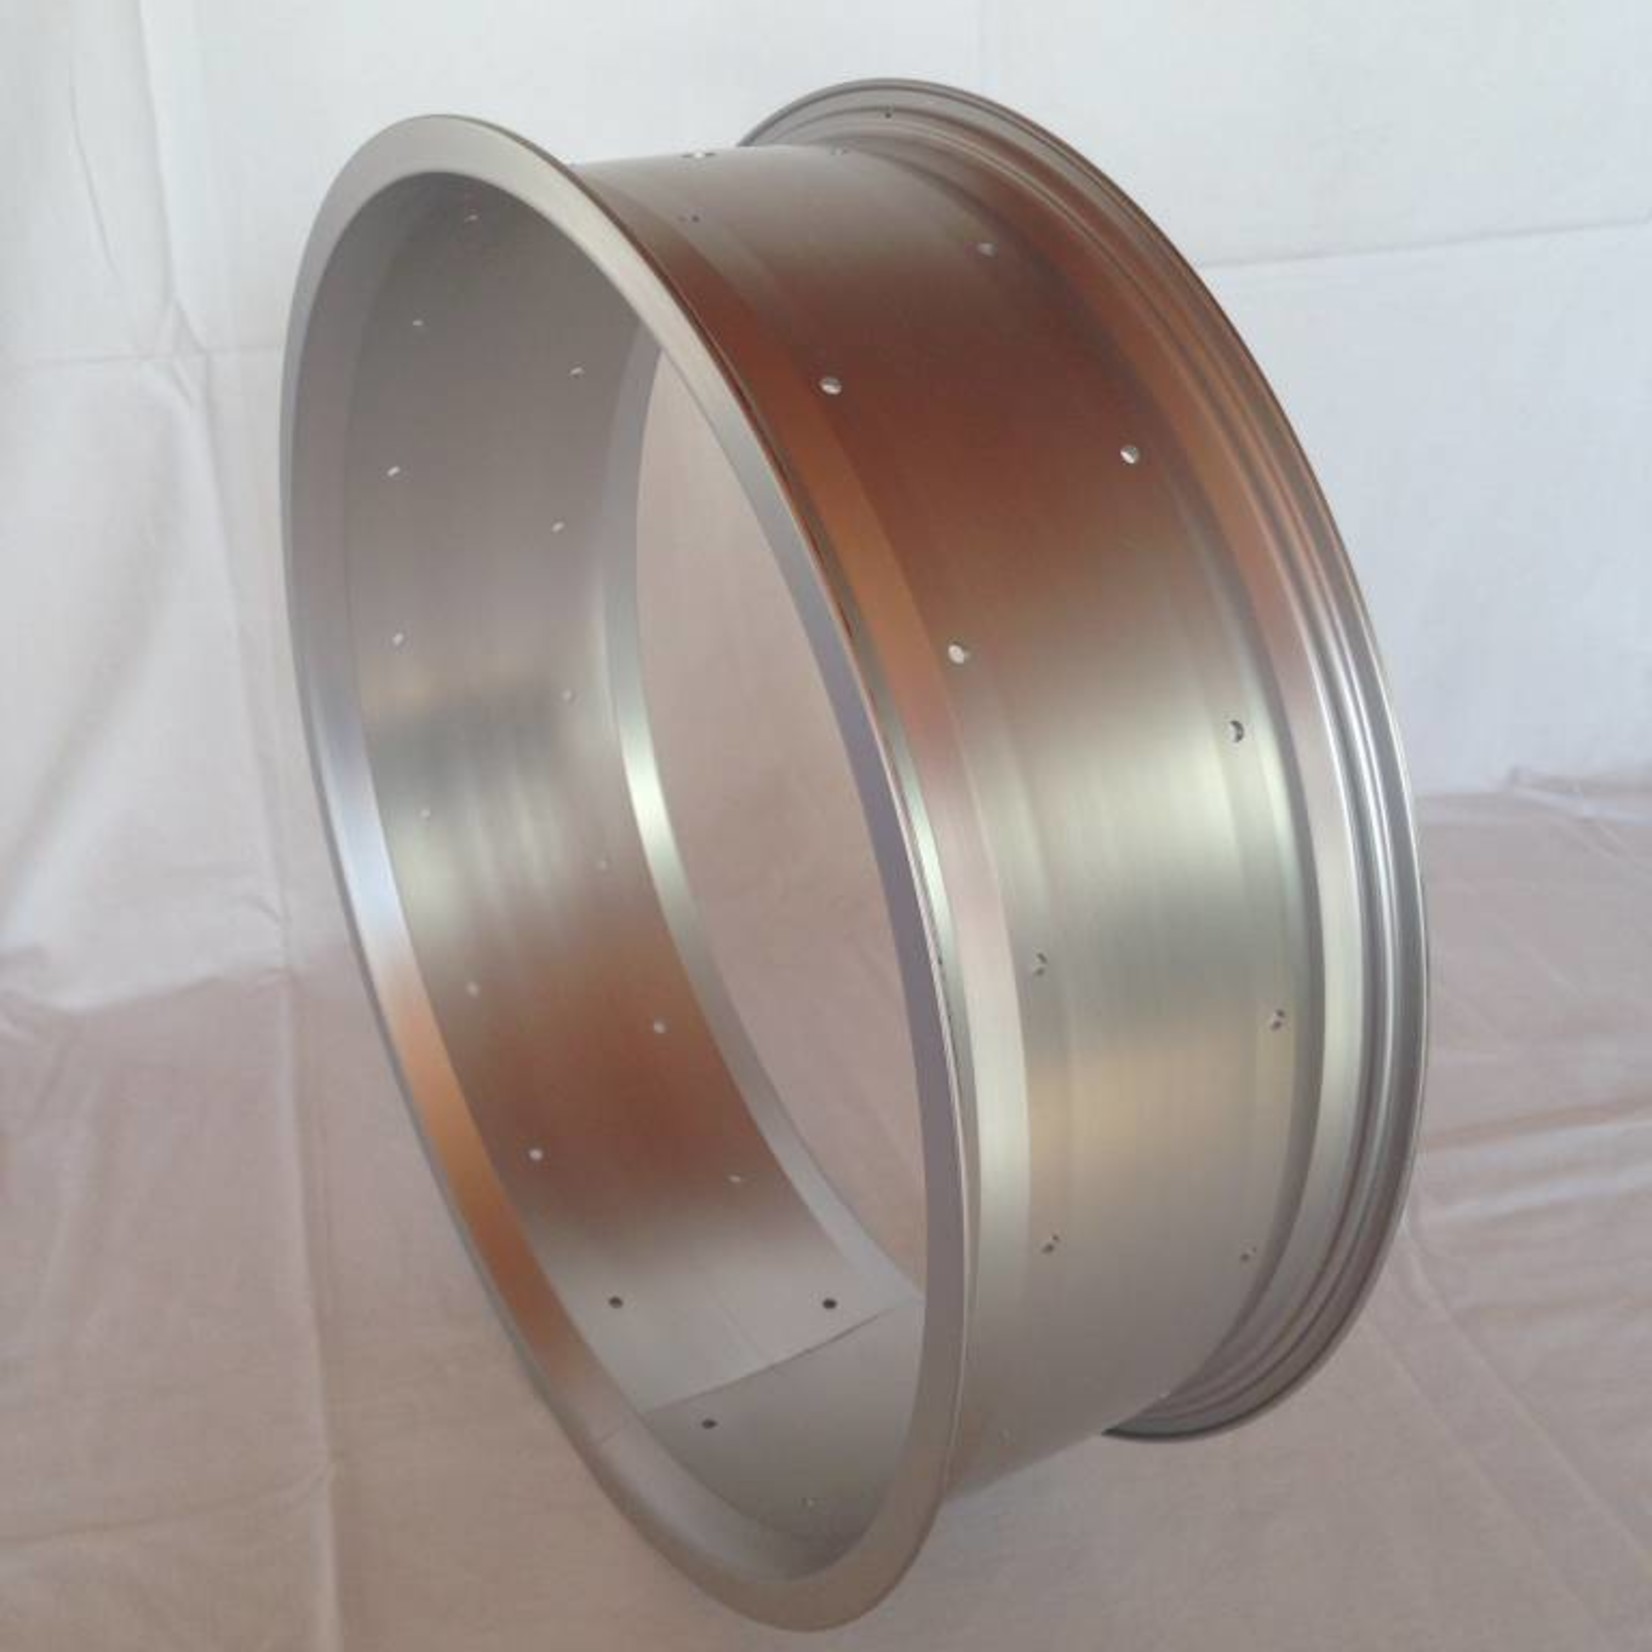 2nd choice alloy rim RM130, 20", silver (matt) anodized